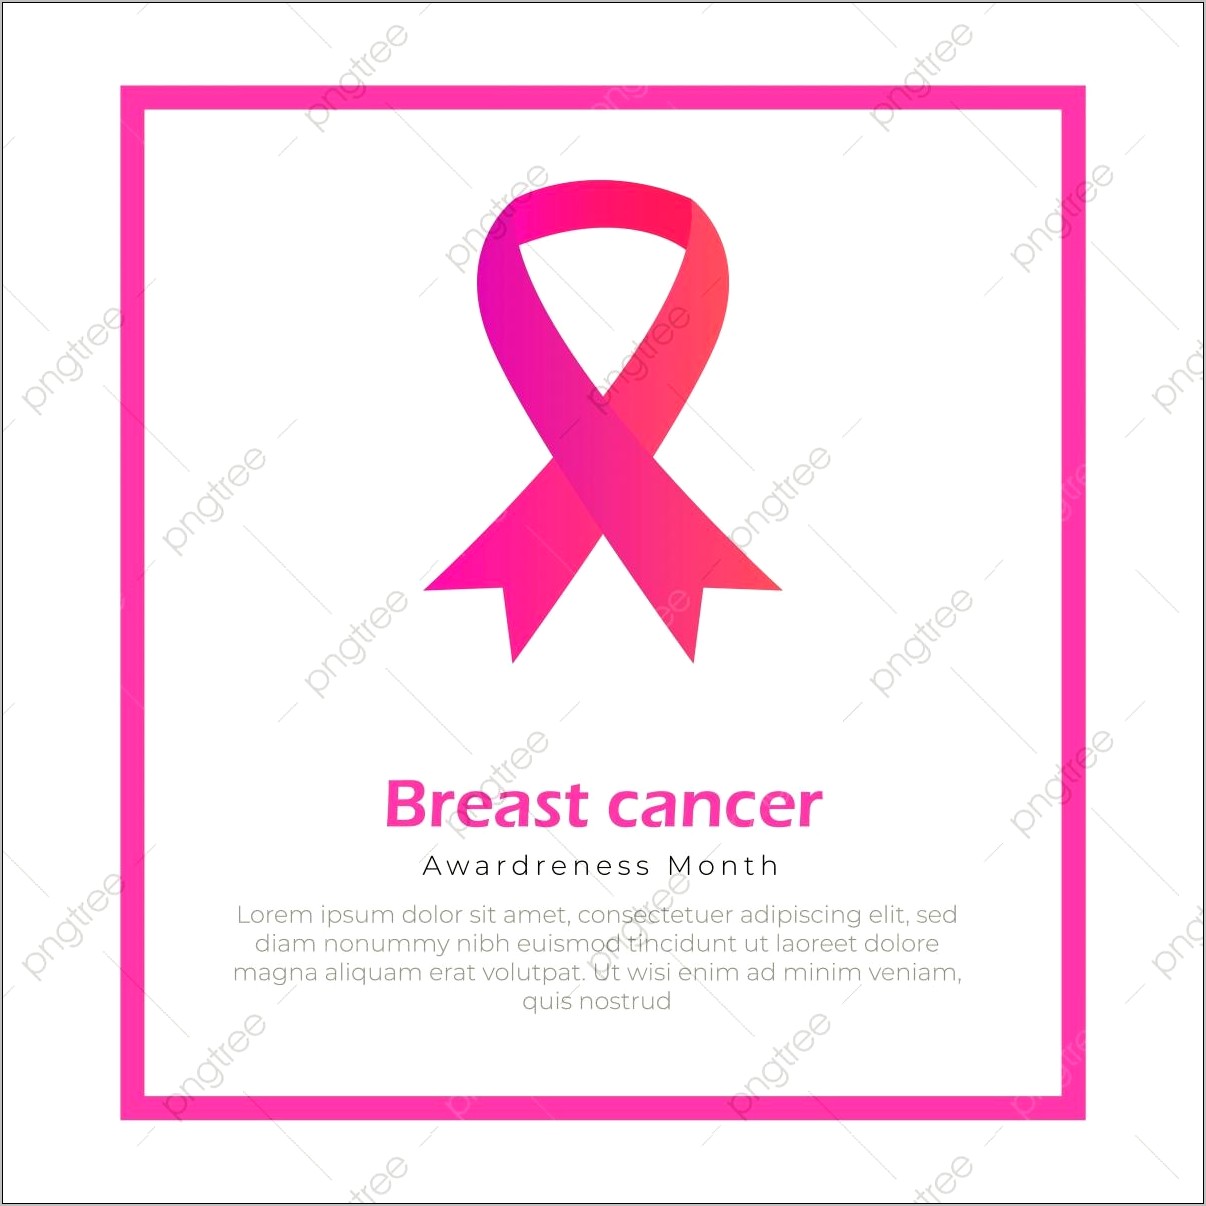 Breast Cancer Awareness Invitation Templates Free